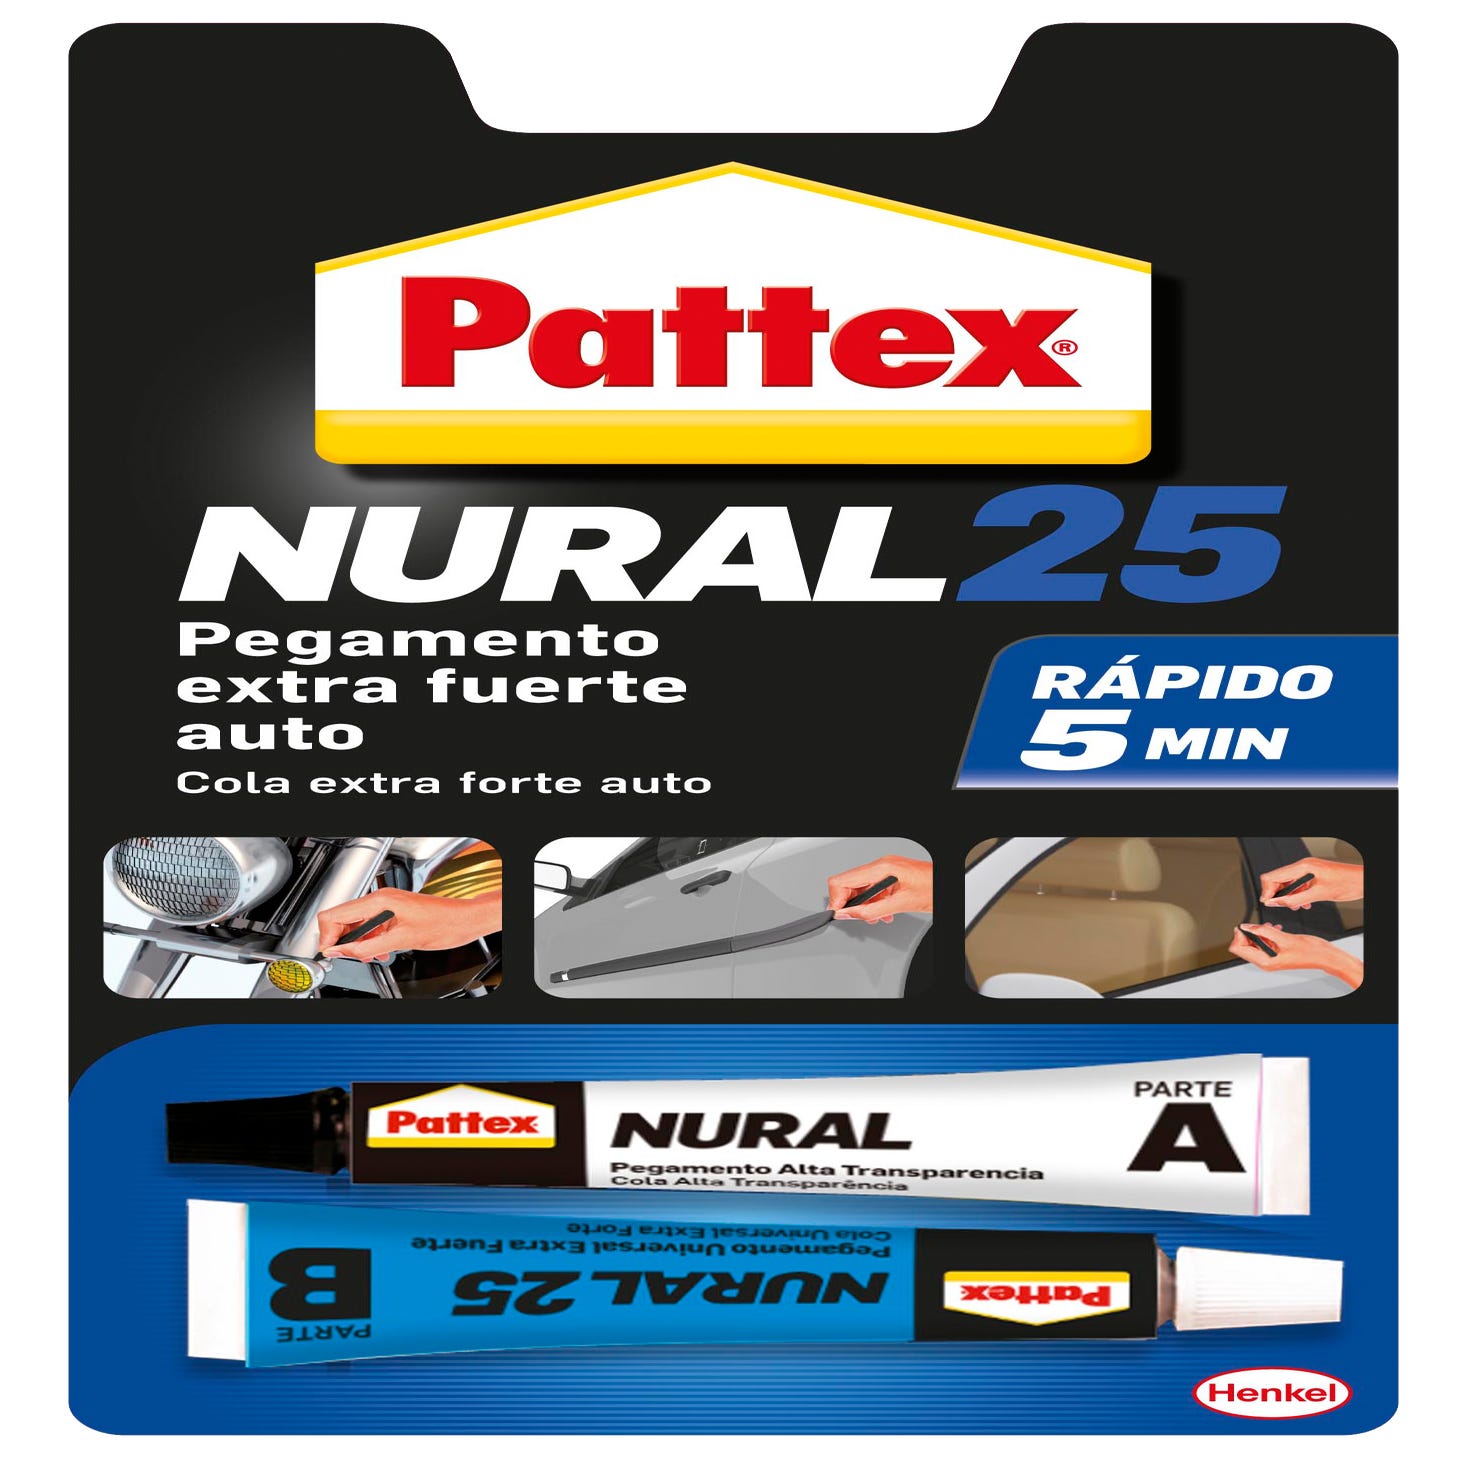 Nuevo adhesivo extrafuerte Pattex Nural 46